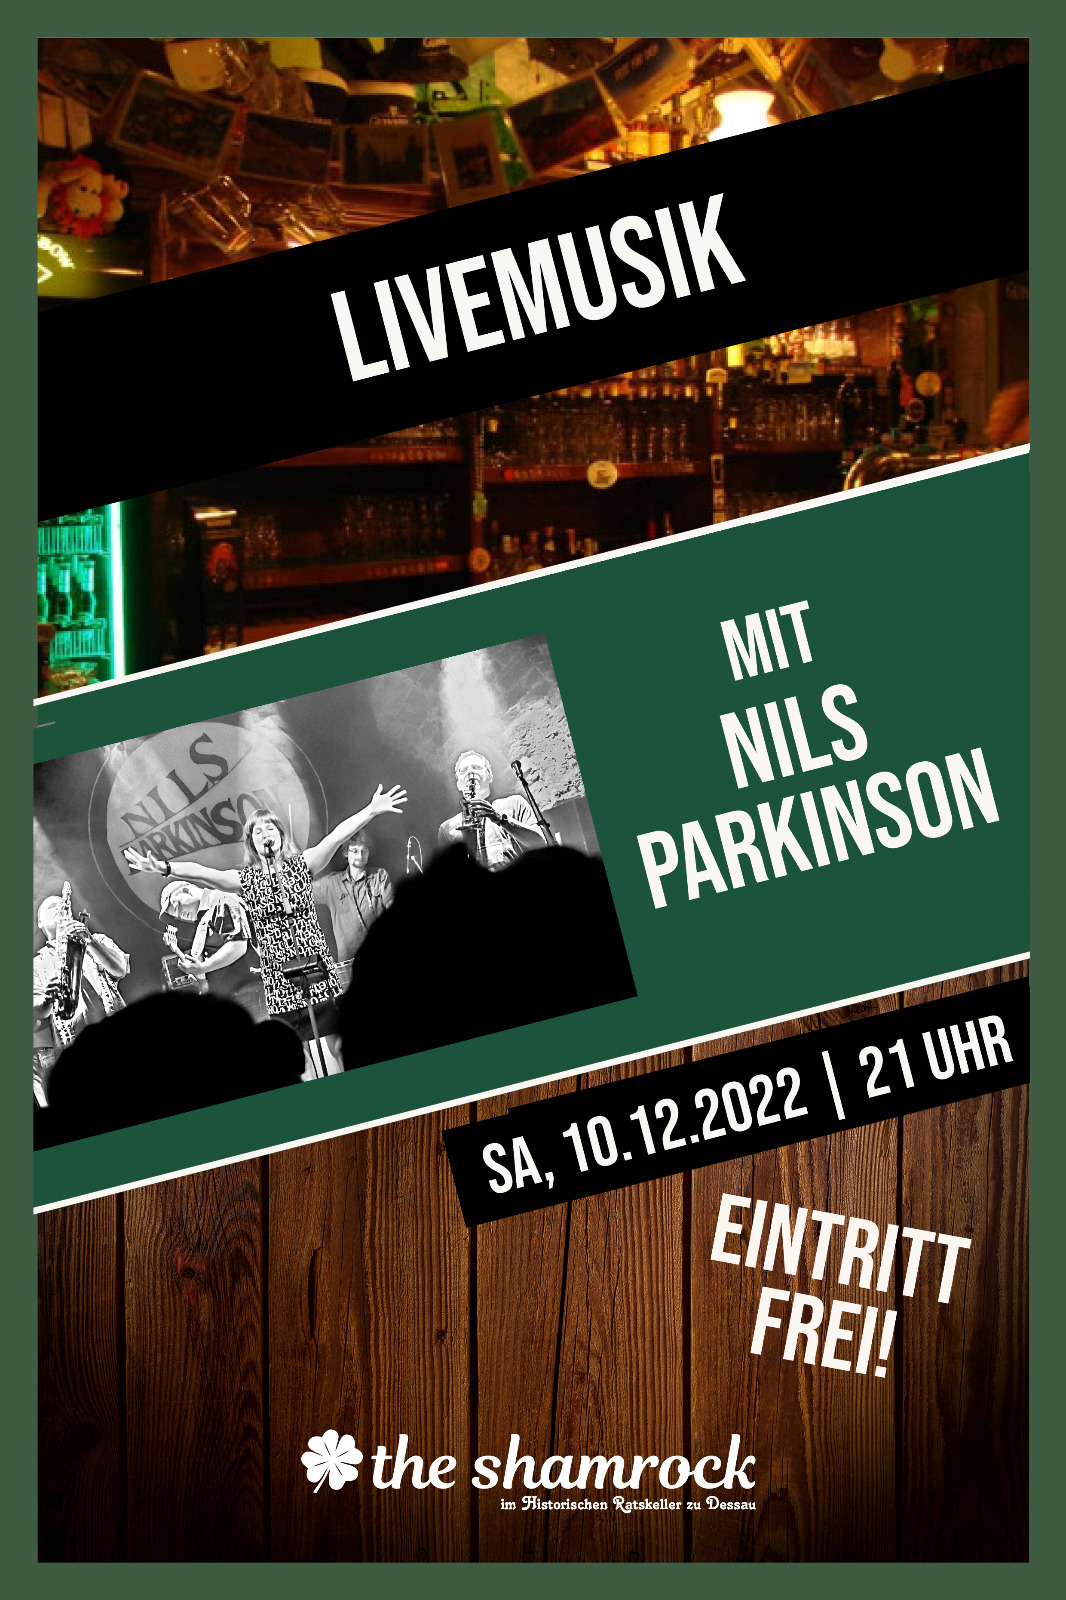 Shamrock Livemusik-Abend am 10.12.2022